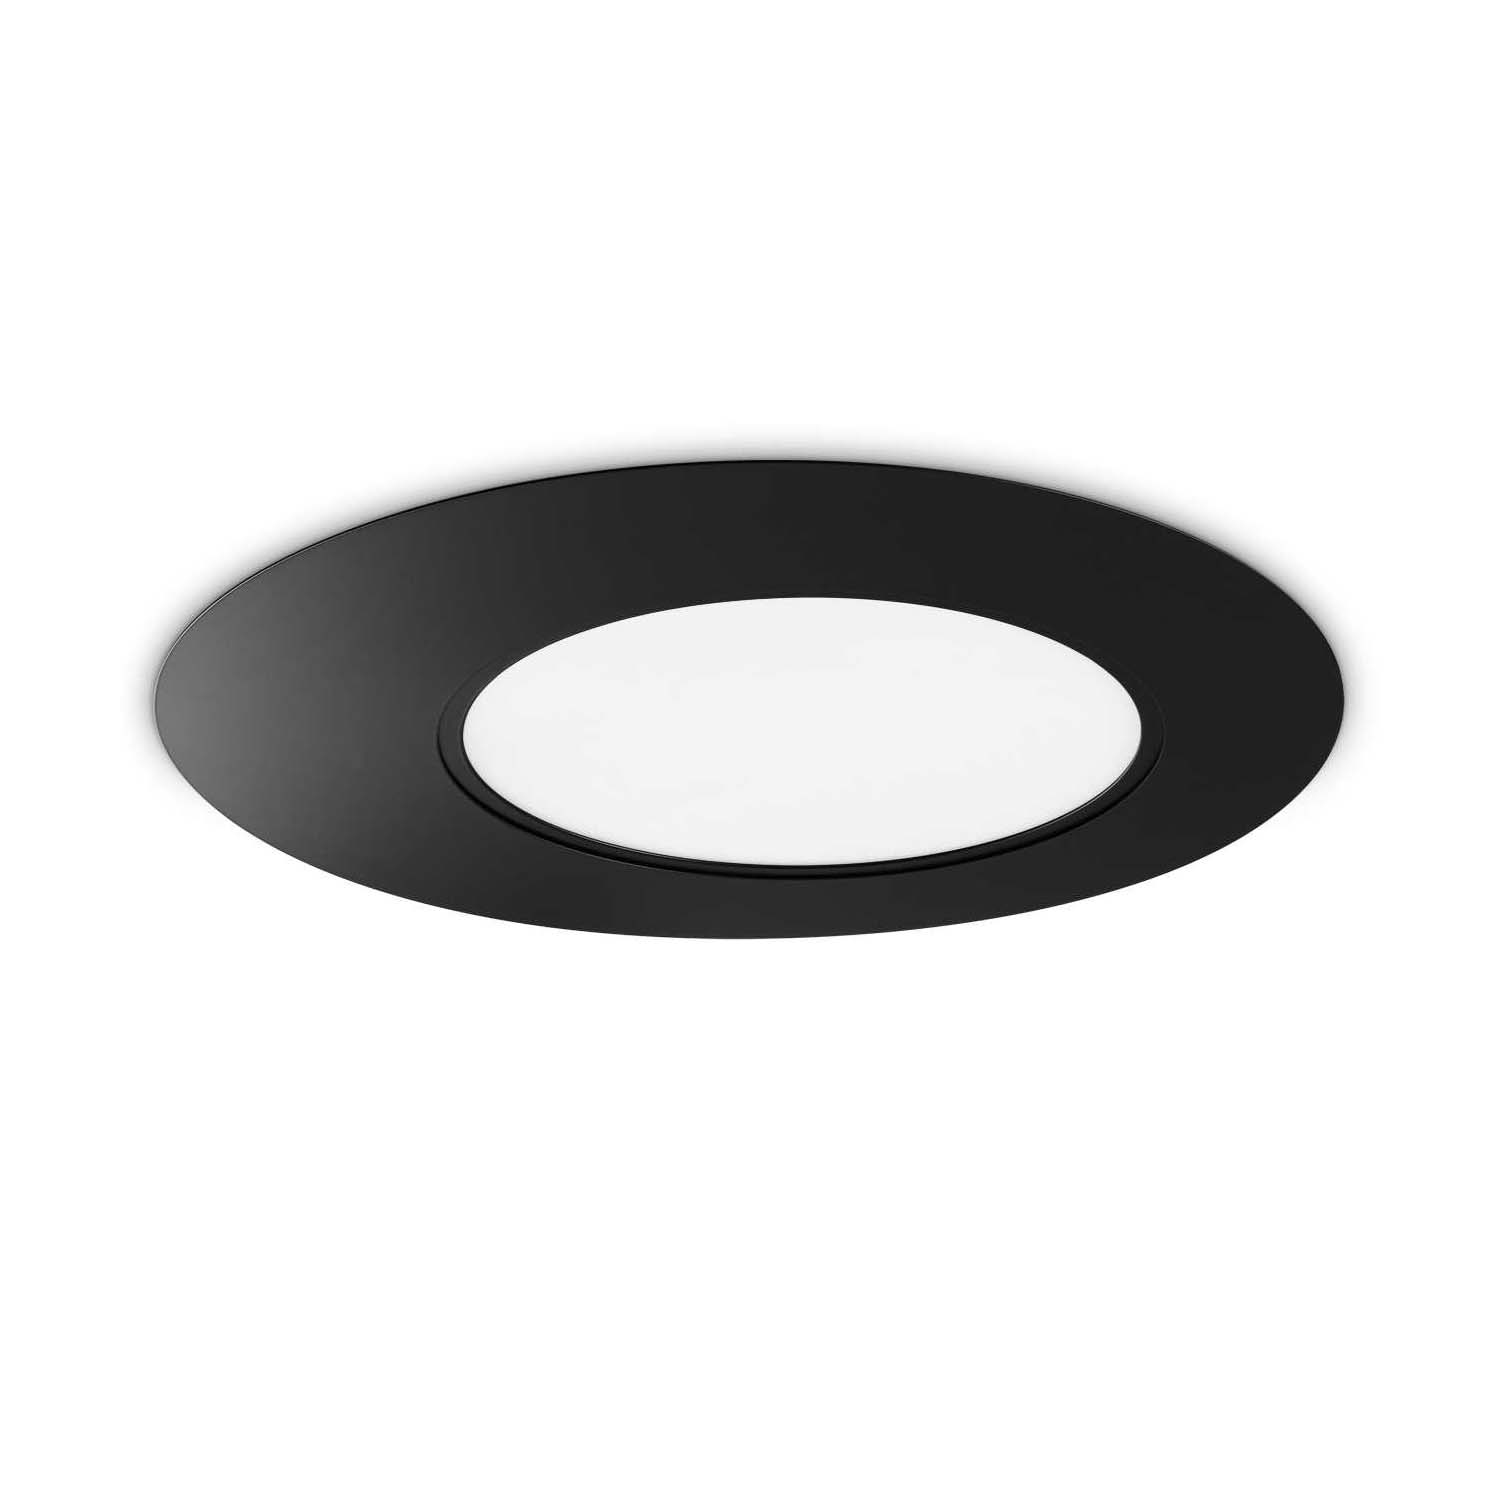 IRIDE - Plafonnier extra-plat design et discret, noir ou blanc